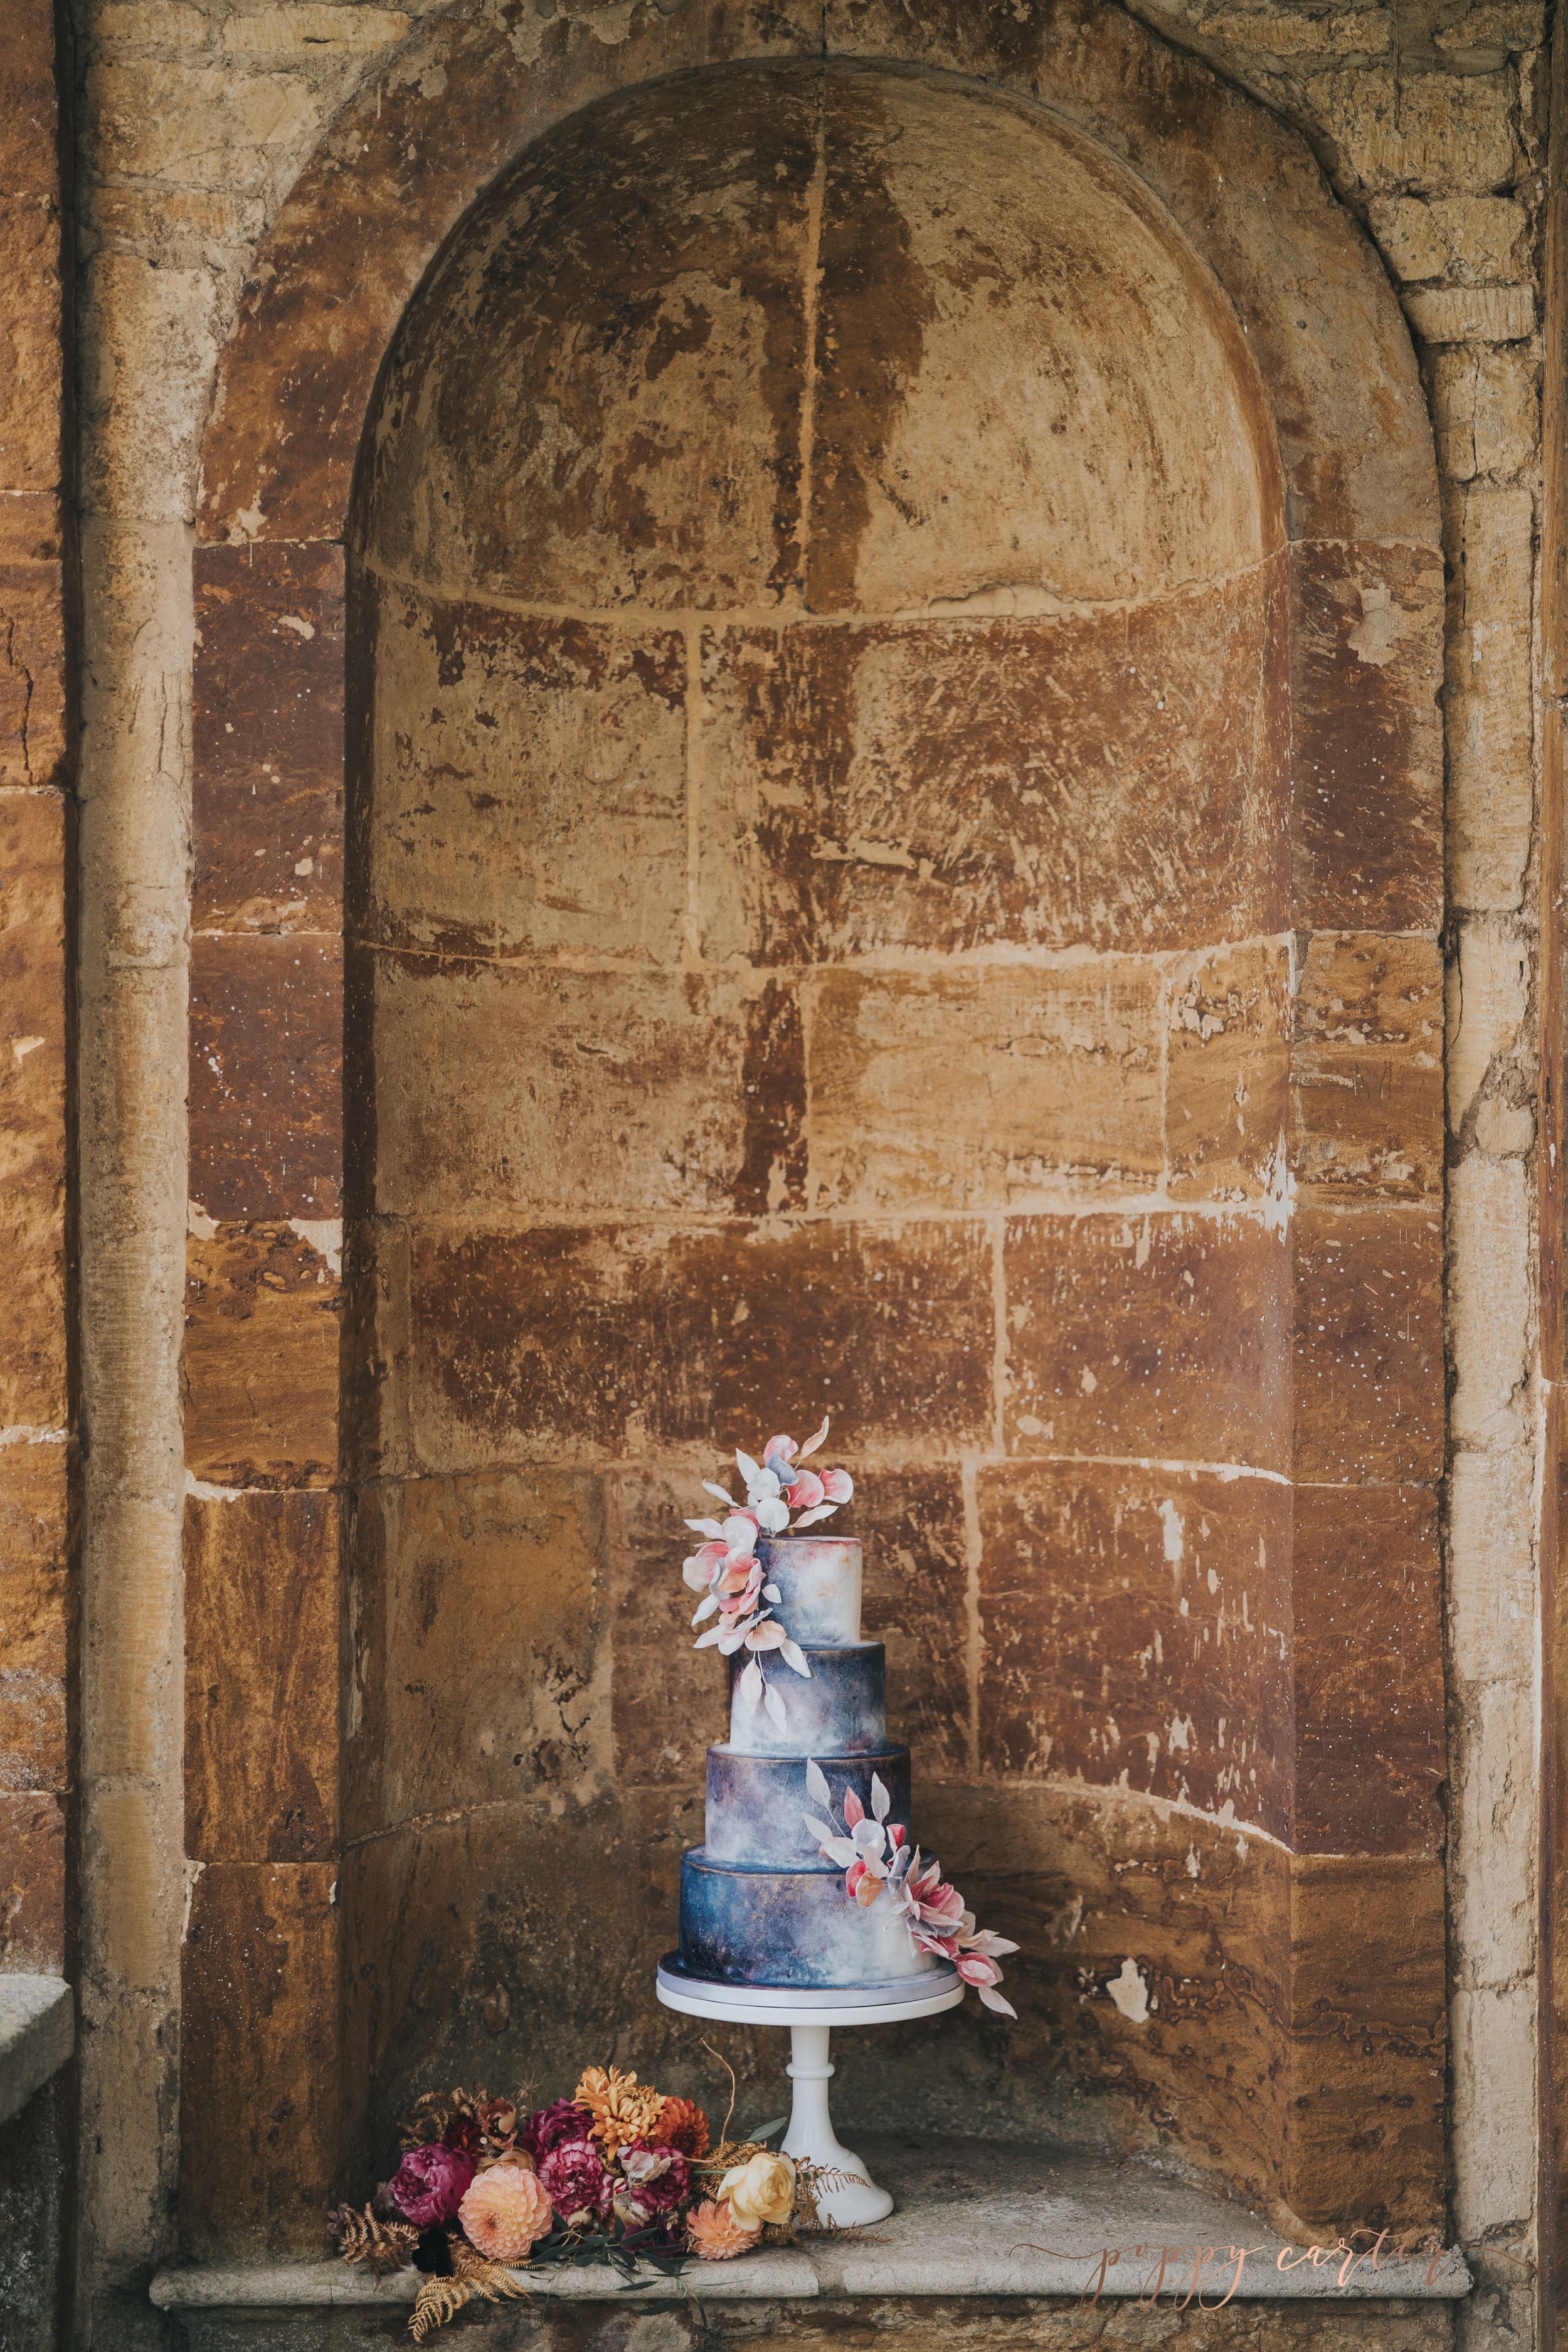 Blue celestial wedding cake in stone alcove